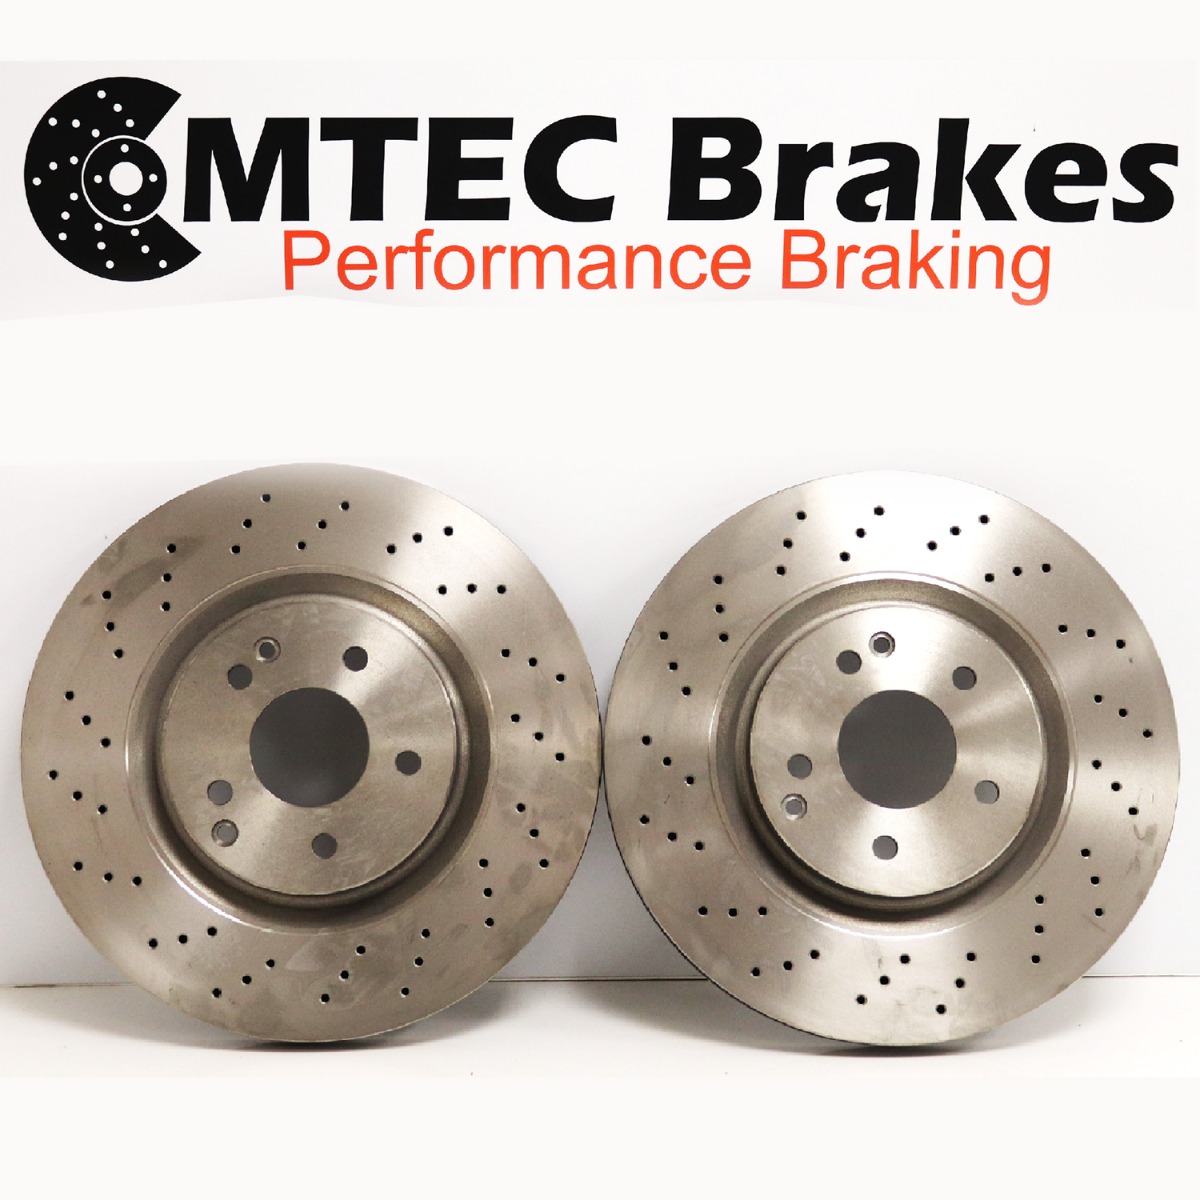 MTEC1633 Performance Brake Discs